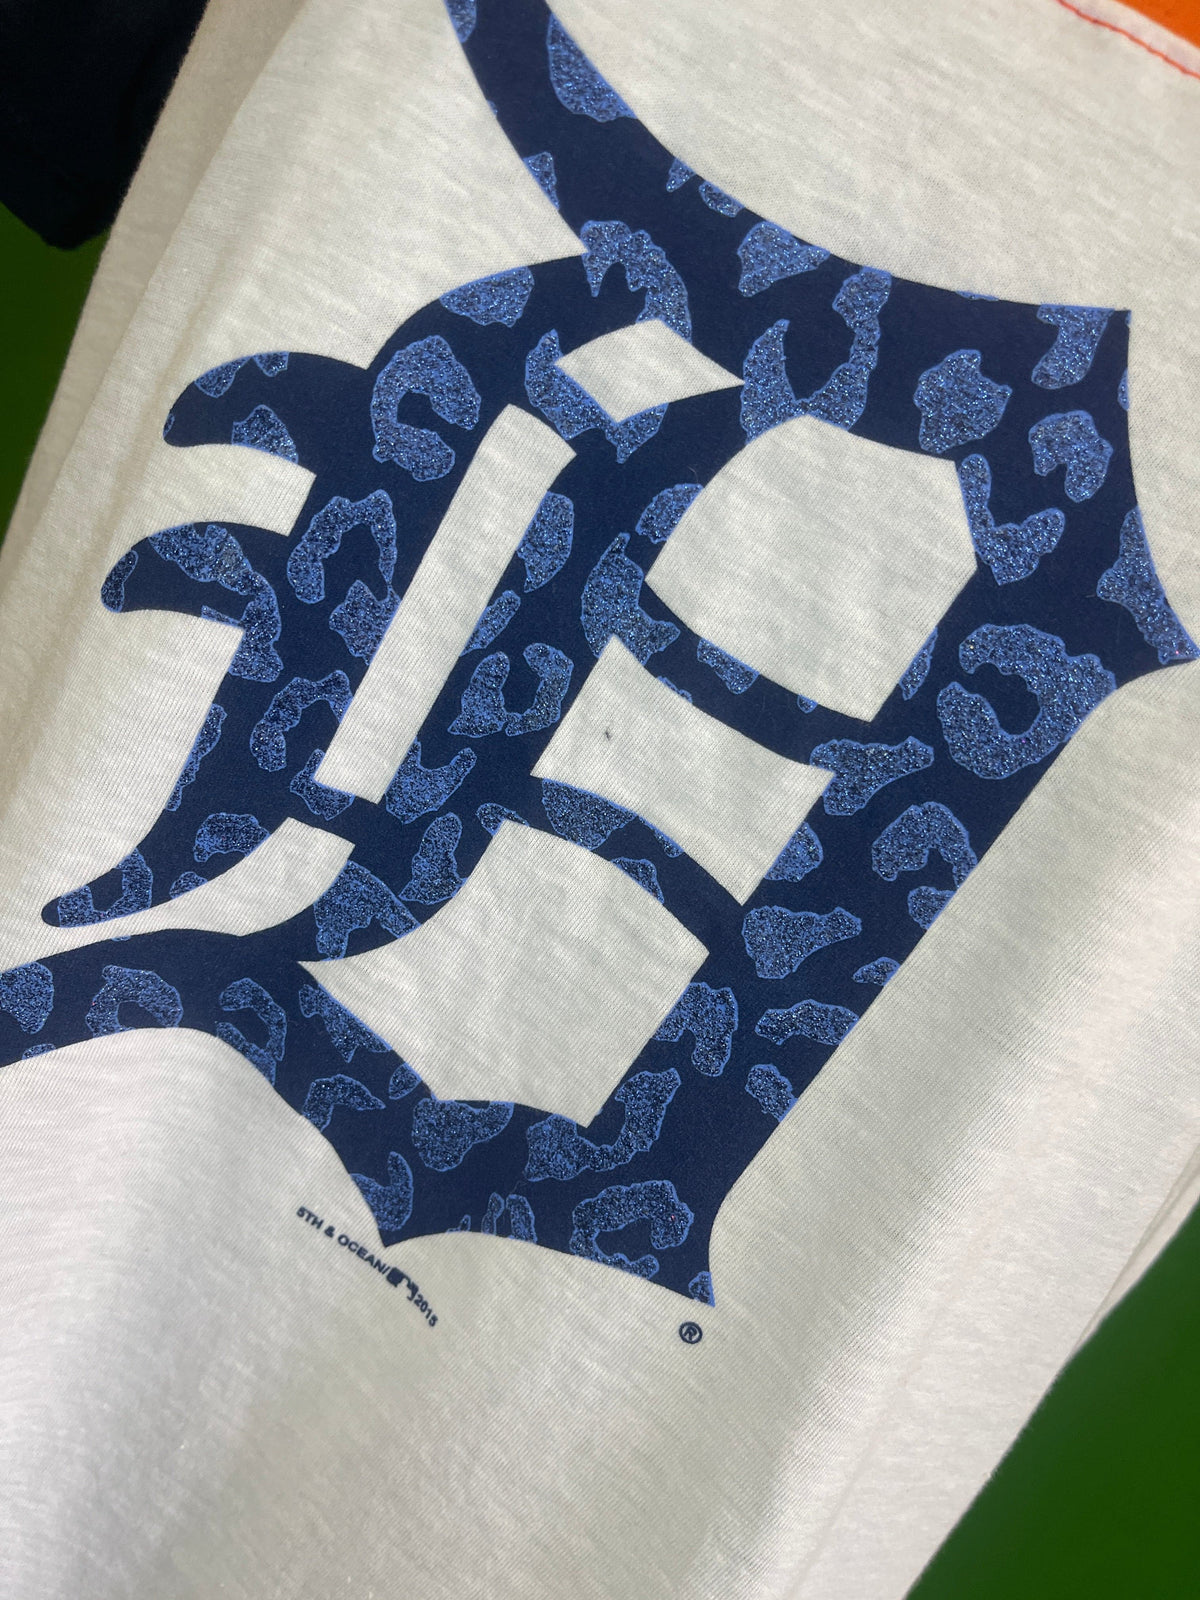 MLB Detroit Tigers Sparkly Leopard Print Logo T-Shirt Women's Medium NWT